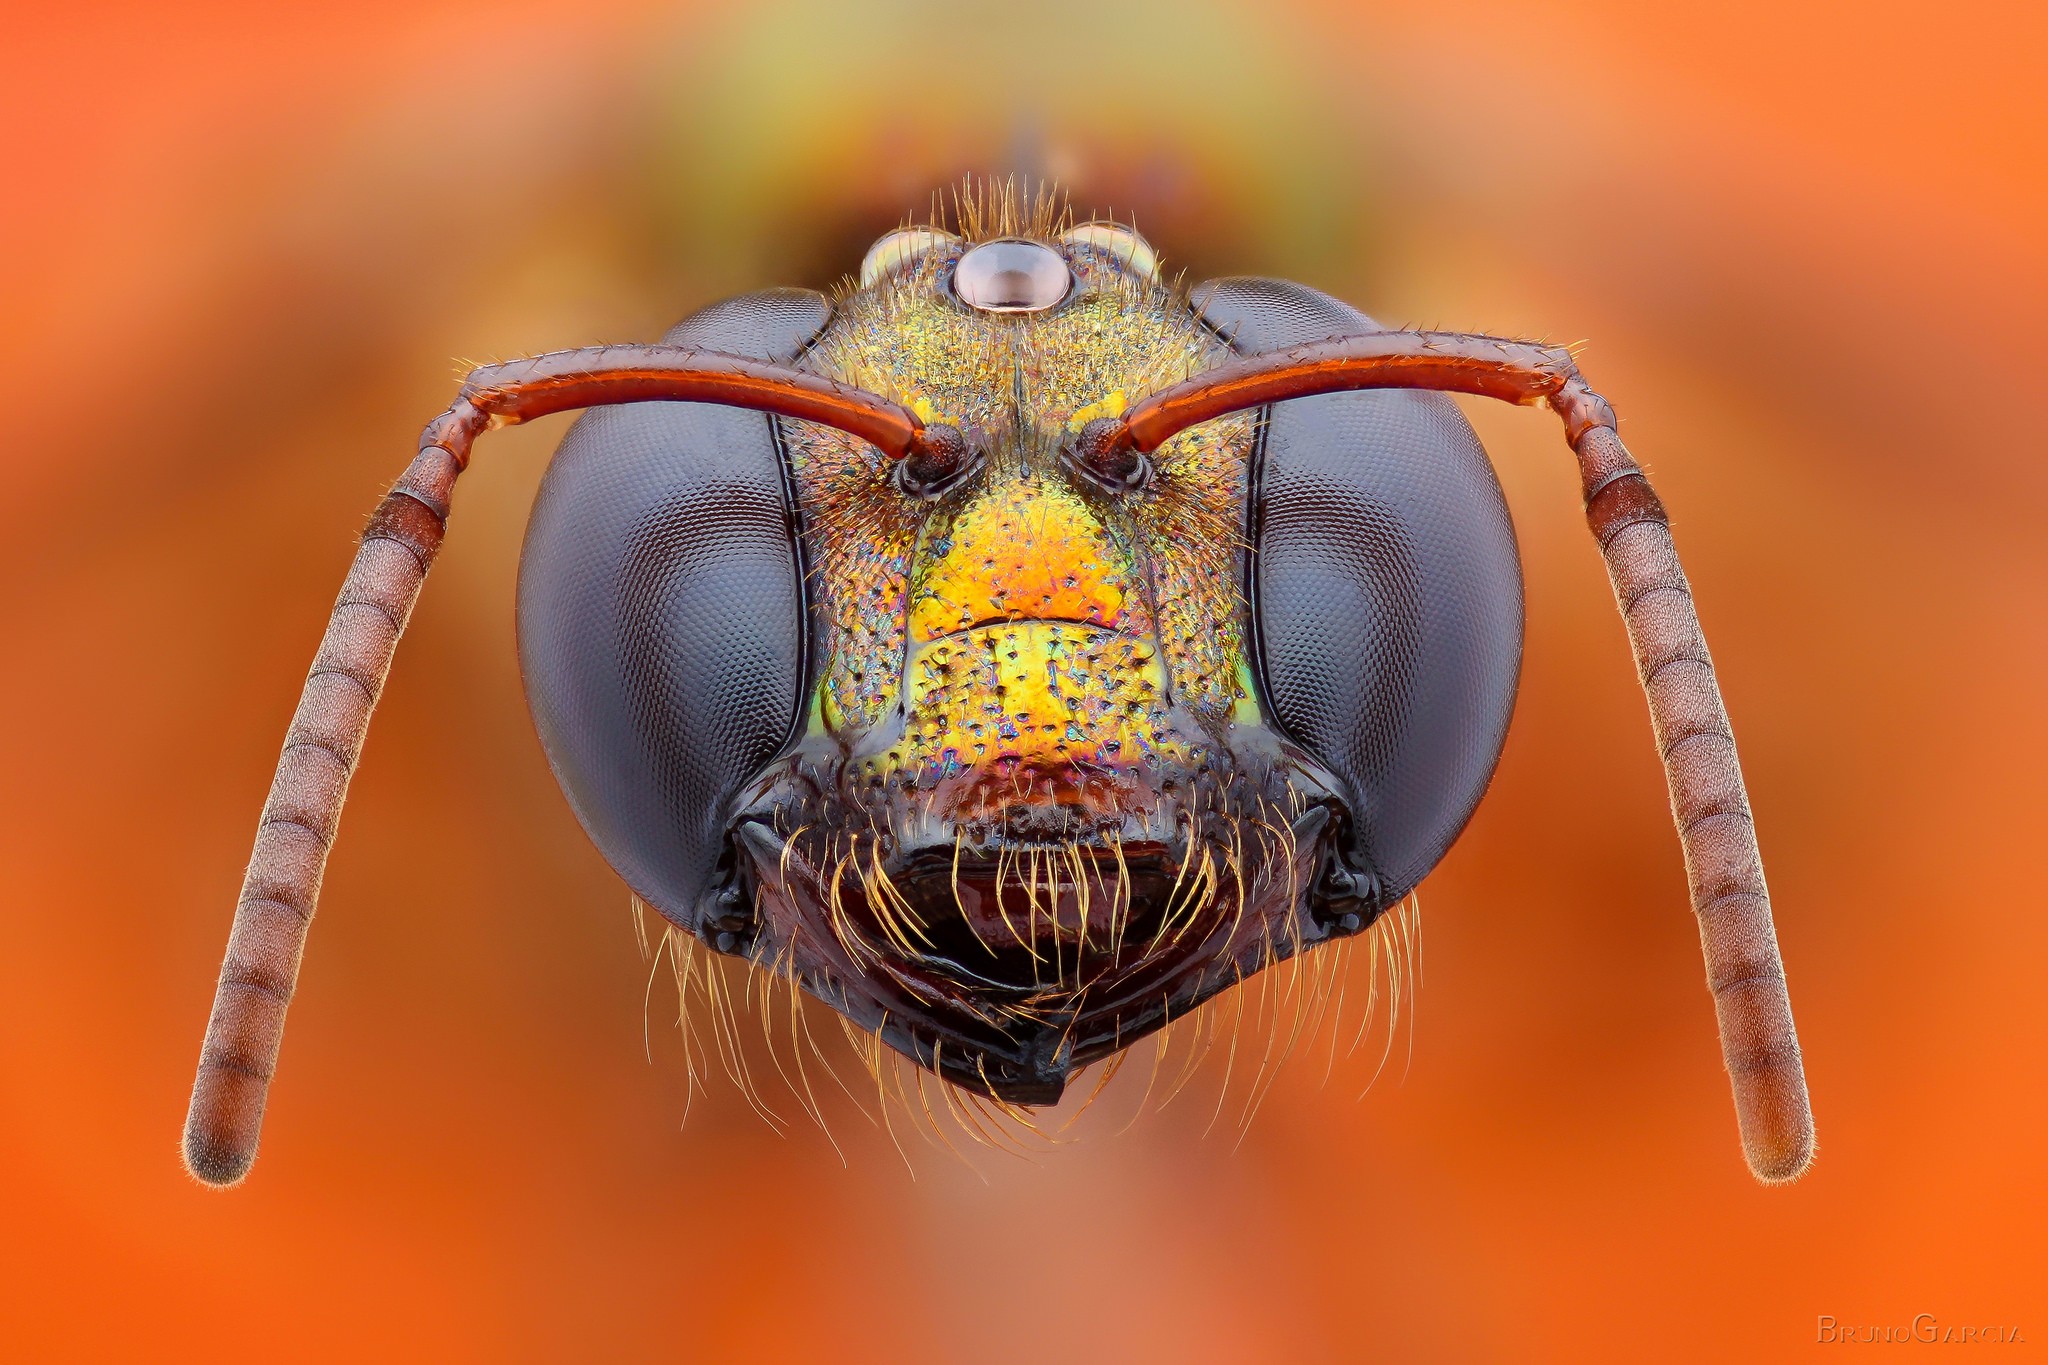 General 2048x1365 bees closeup insect macro animals